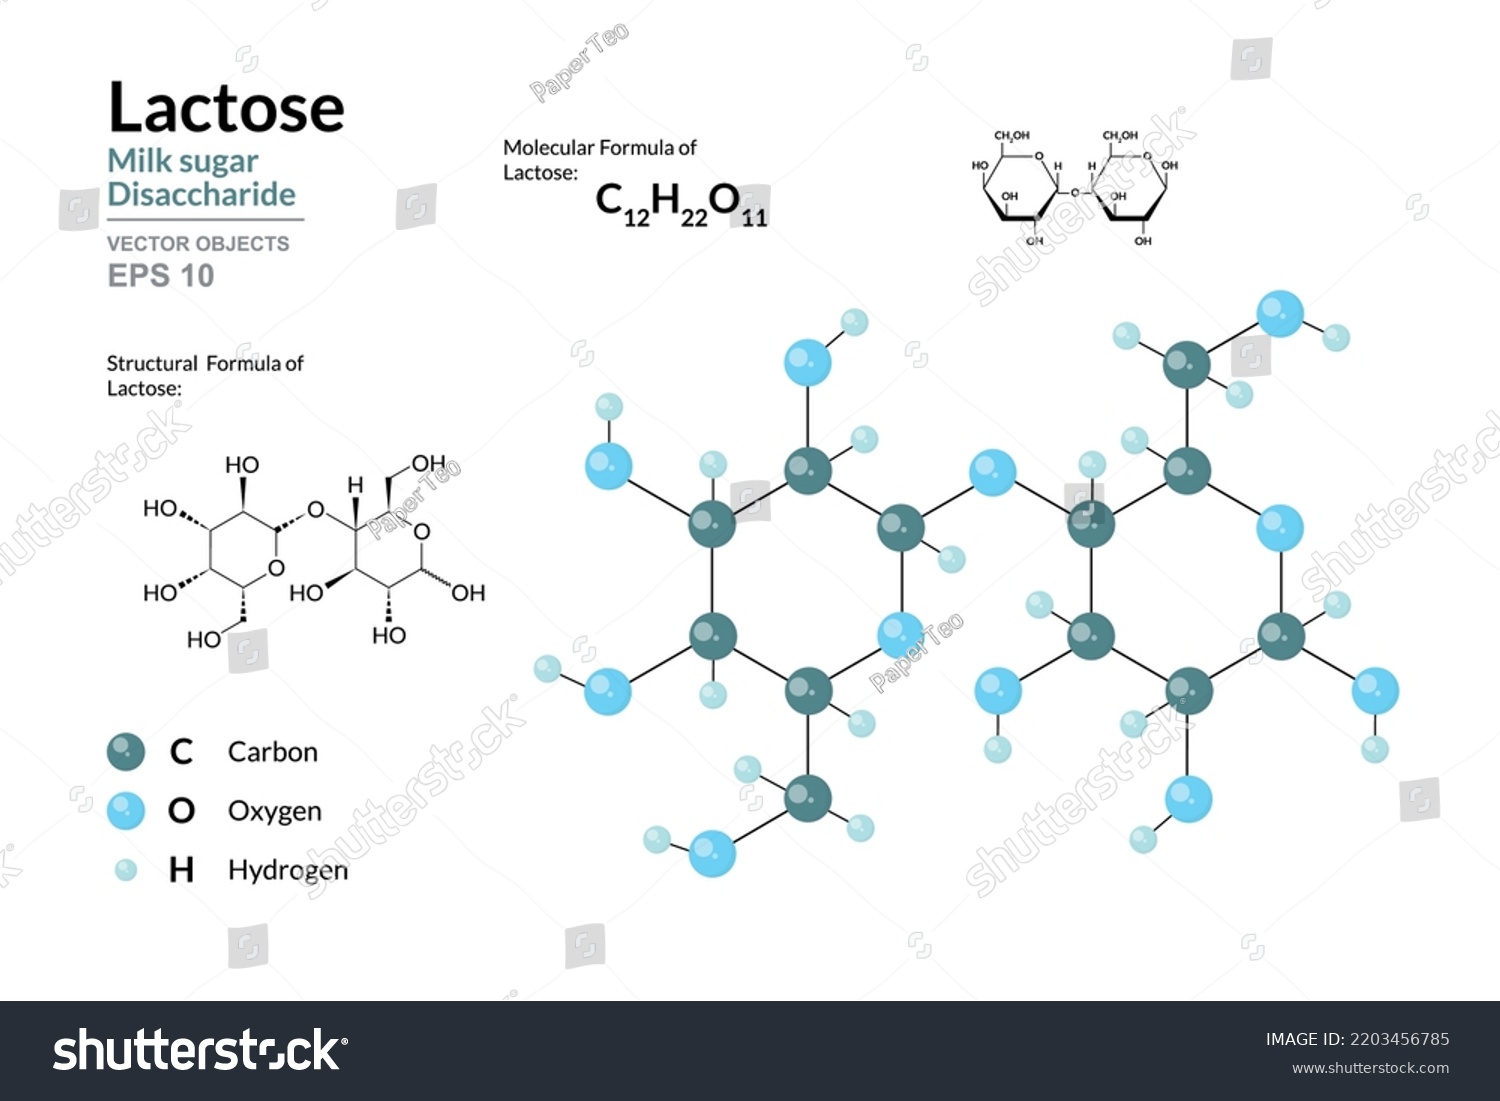 SVG of Lactose. Milk Sugar. Disaccharide. Structural Chemical Formula and Molecule 3d Model. C12H22O11. Atoms with Color Coding. Vector Illustration  svg